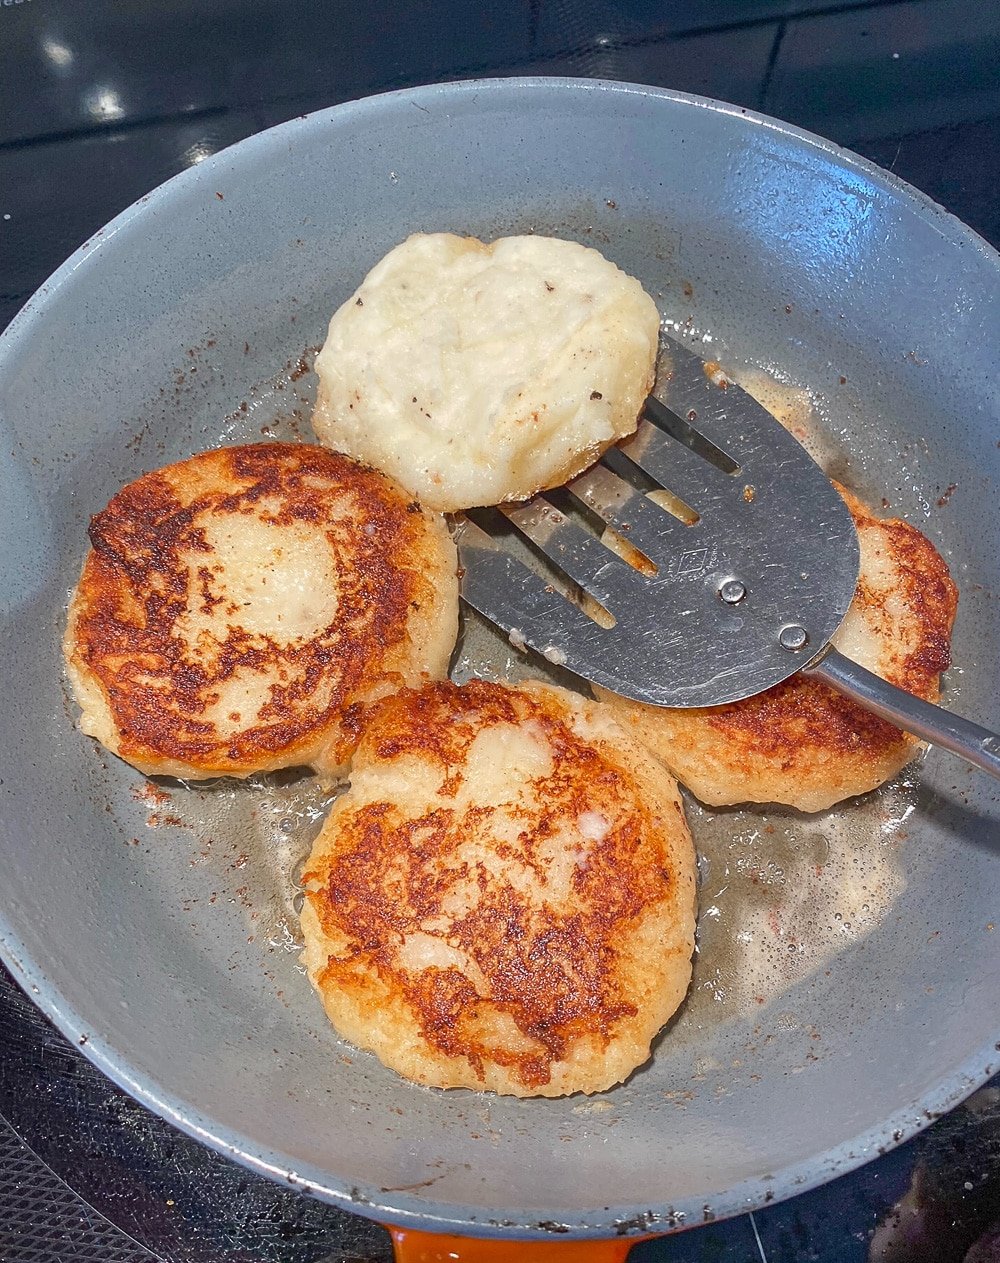 Turning Irish Potato Cakes boxty in a frying pan.